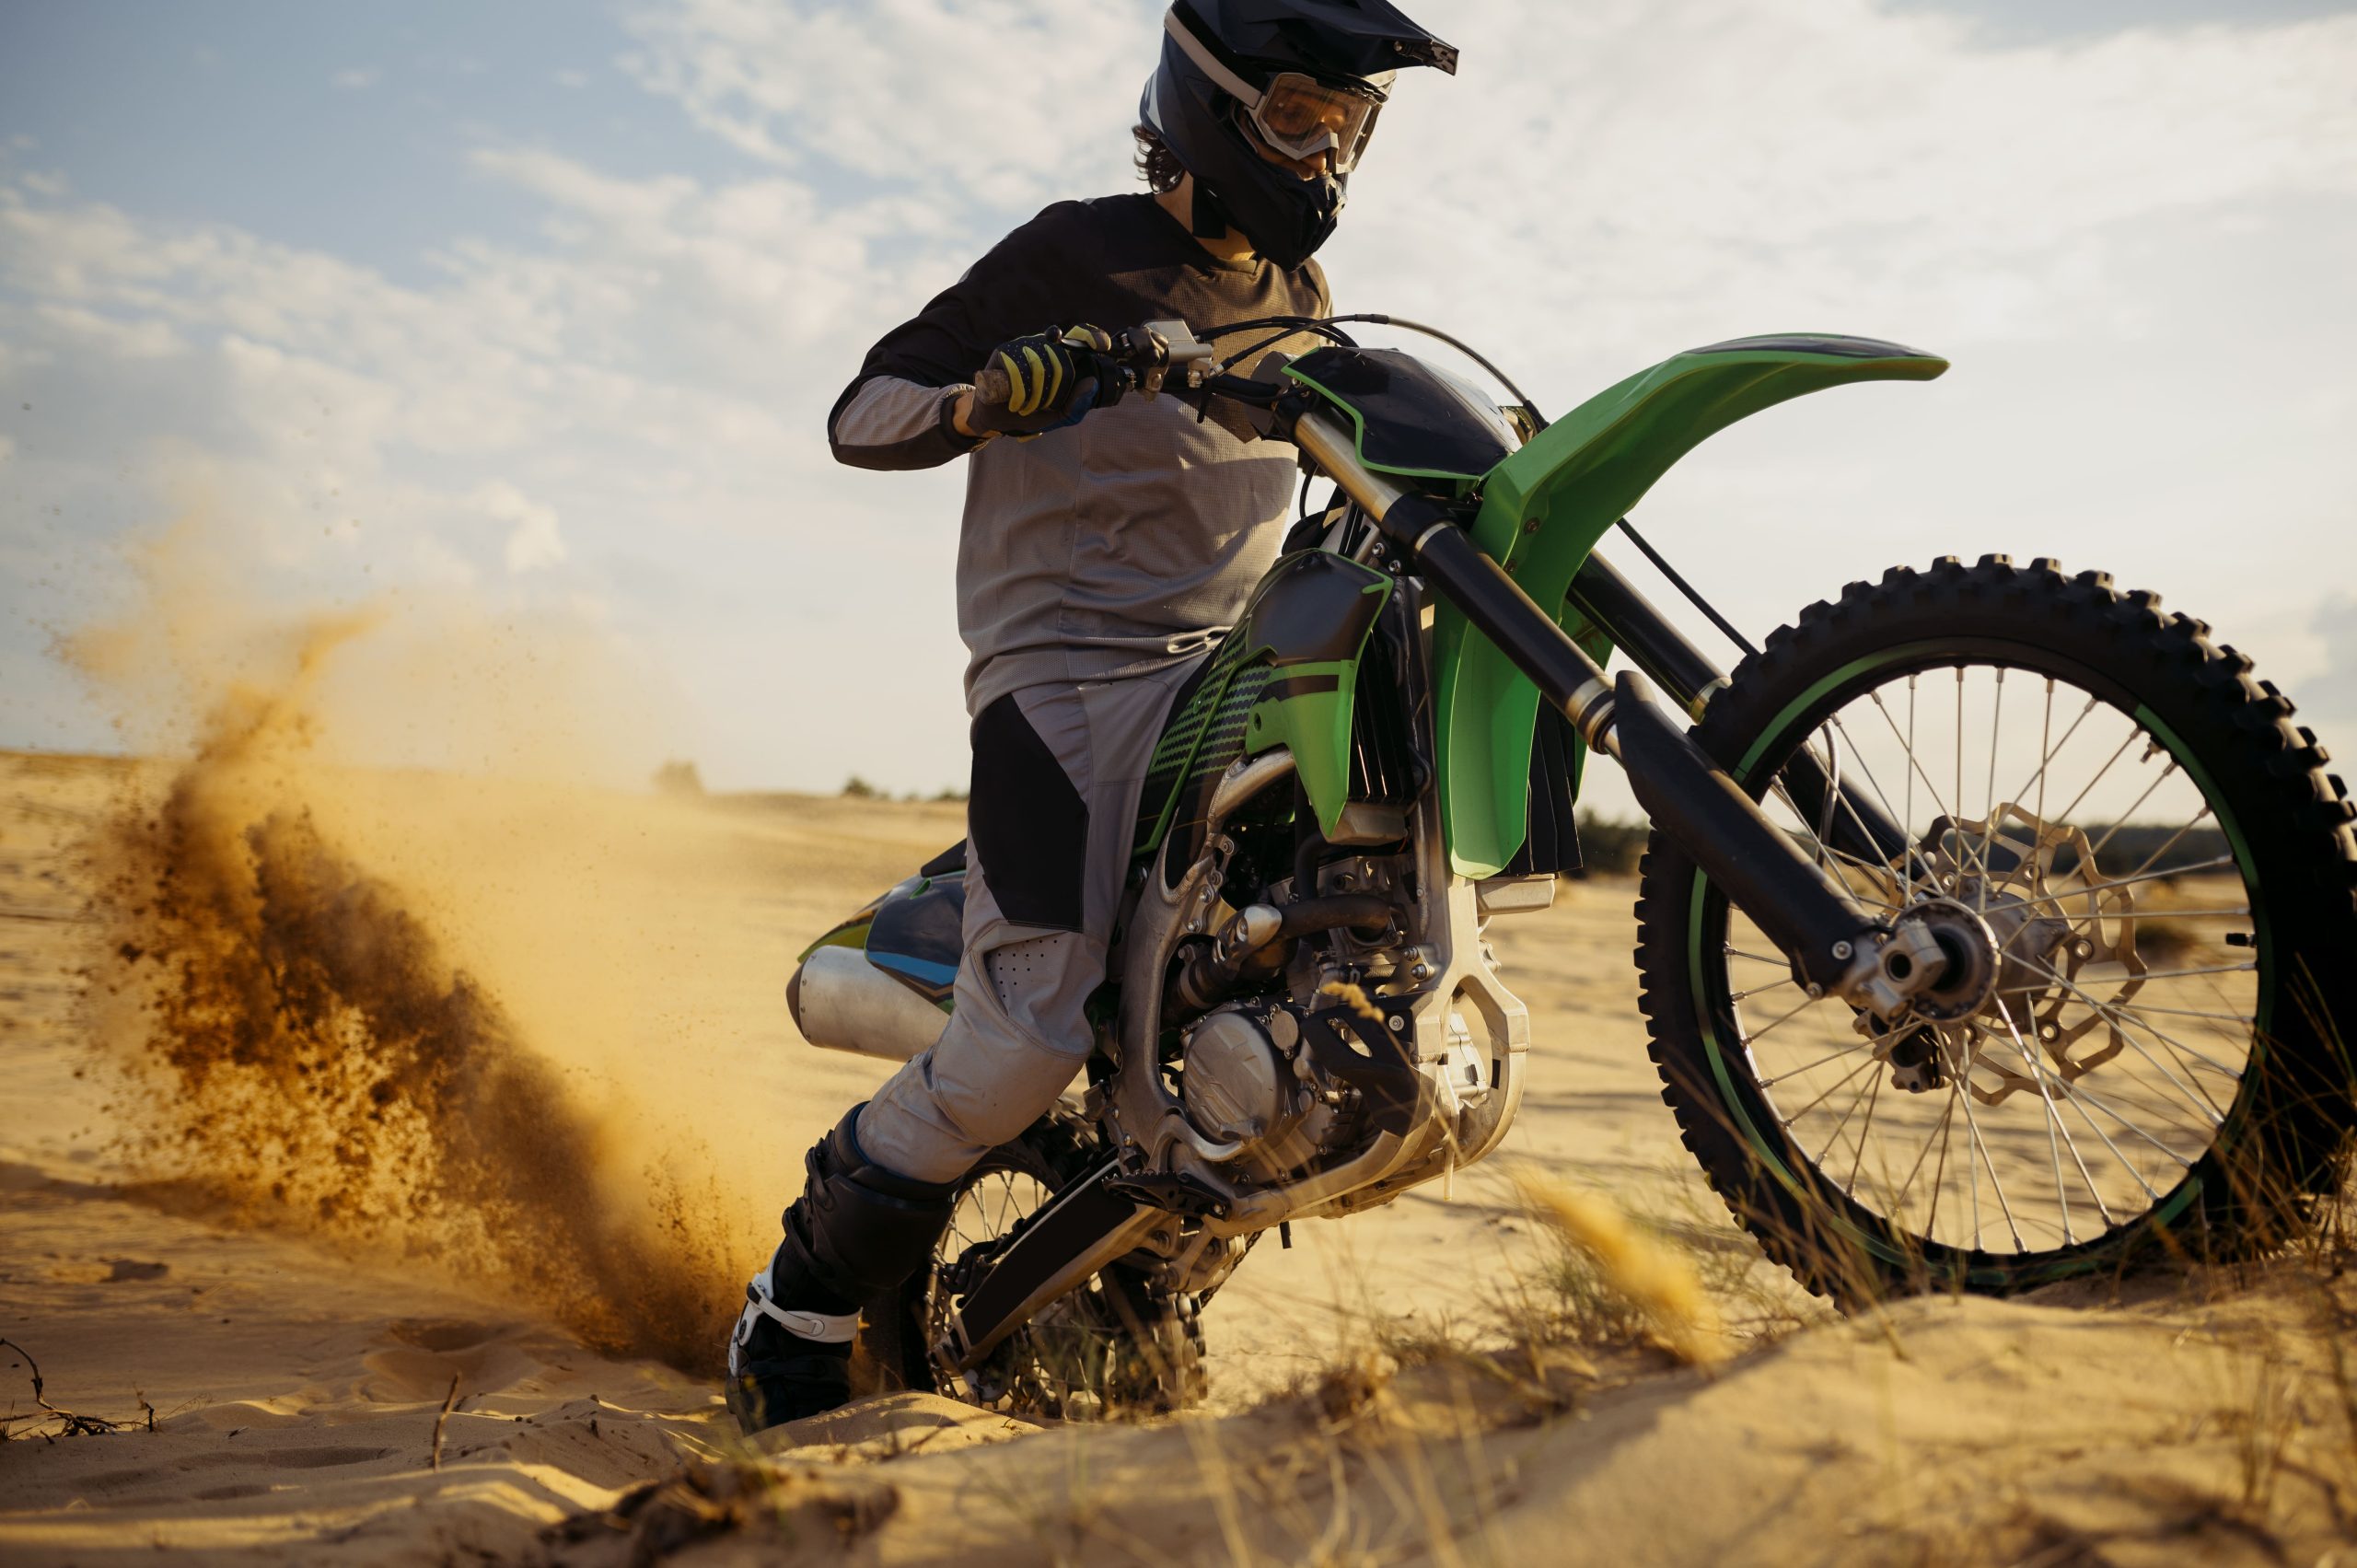 extreme-motocross-rider-riding-on-dirt-track-2022-02-17-23-21-29-utc